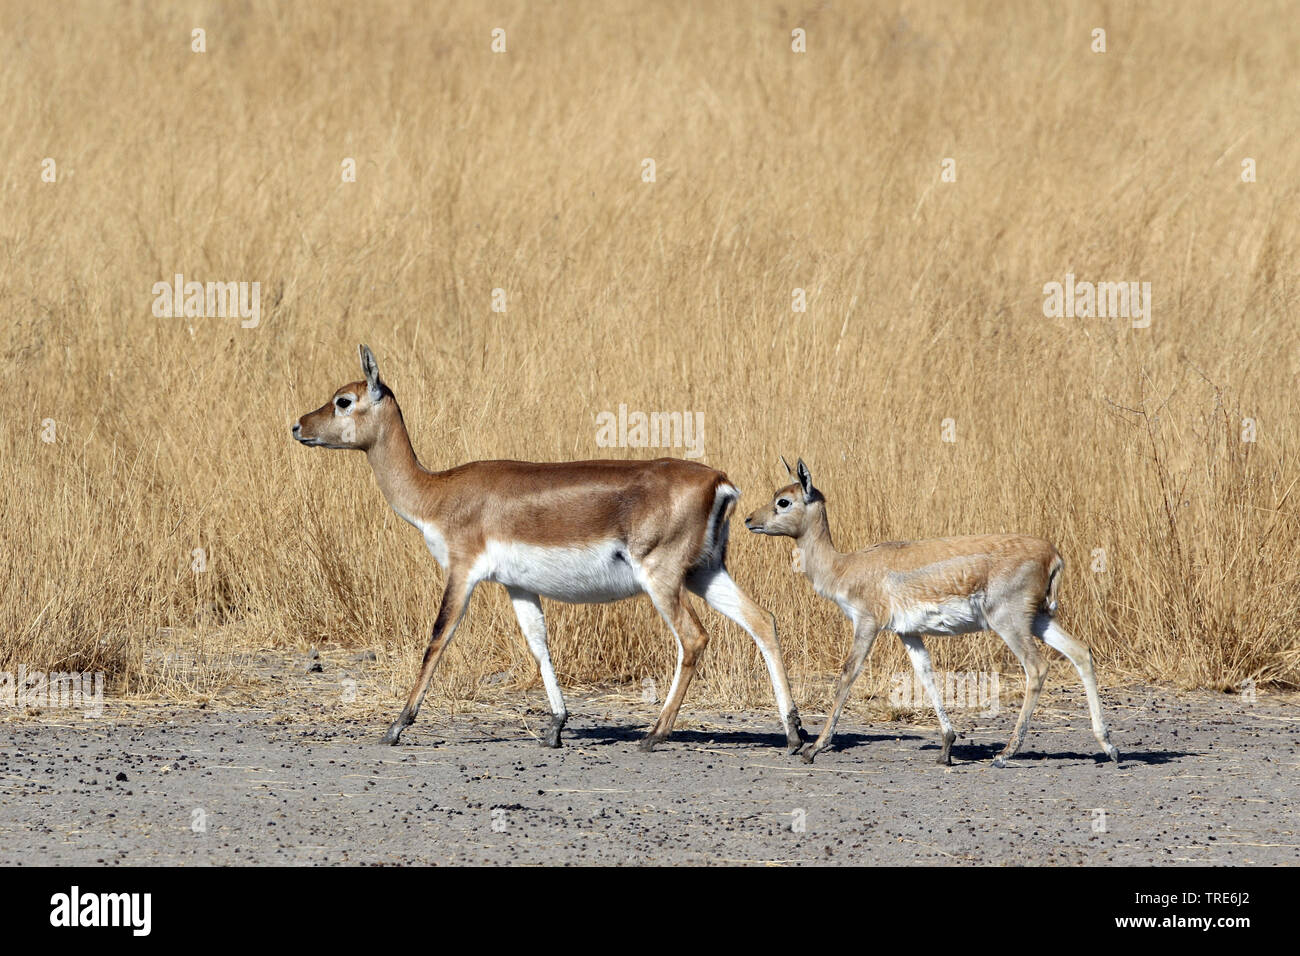 blackbuck (Antilope cervicapra), female with young walking through savanna, India, Tal Chhapar Stock Photo